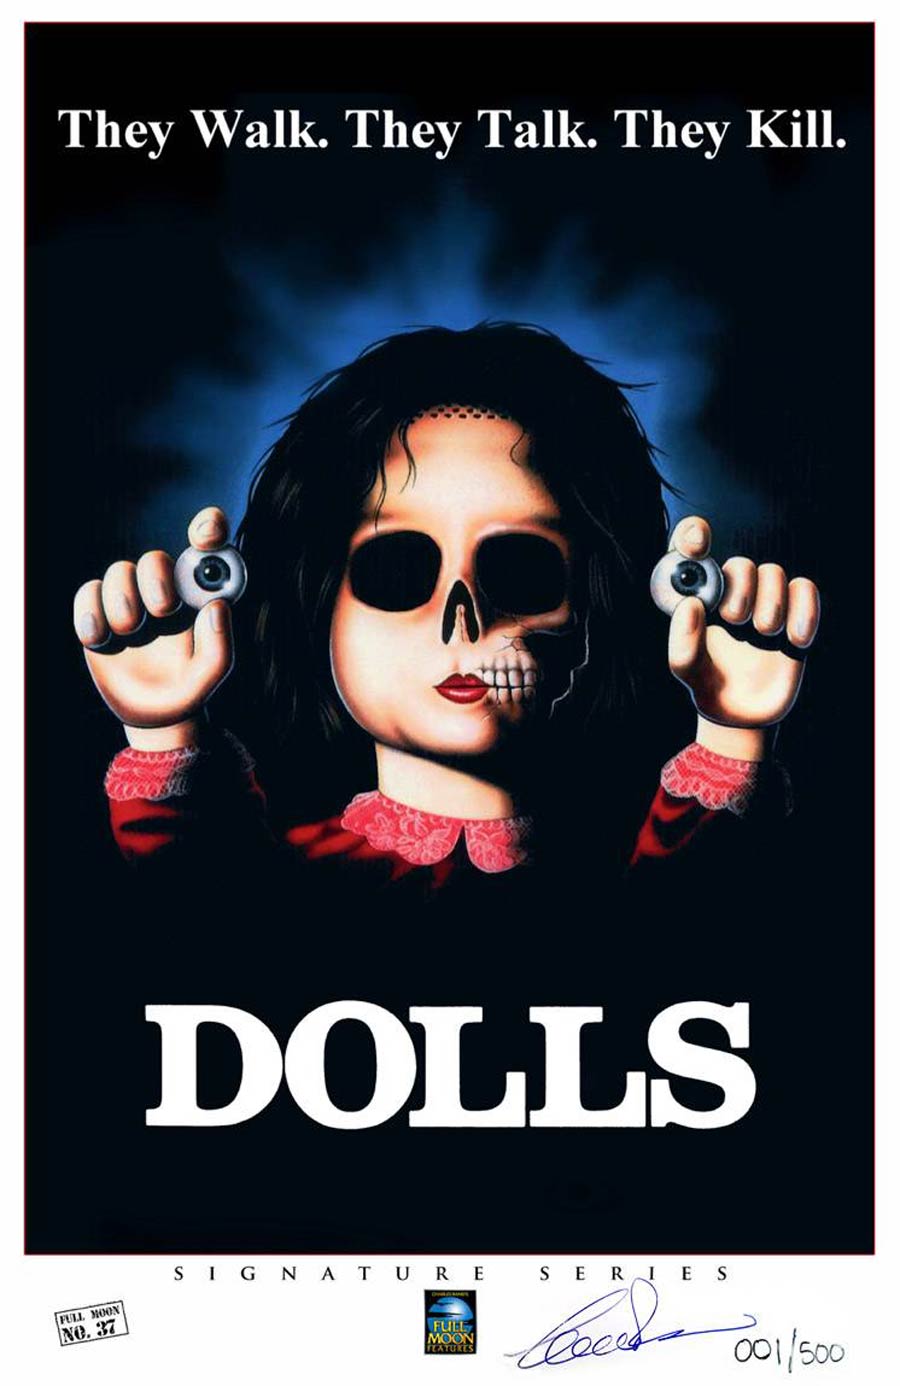 Signature Series Poster - Dolls